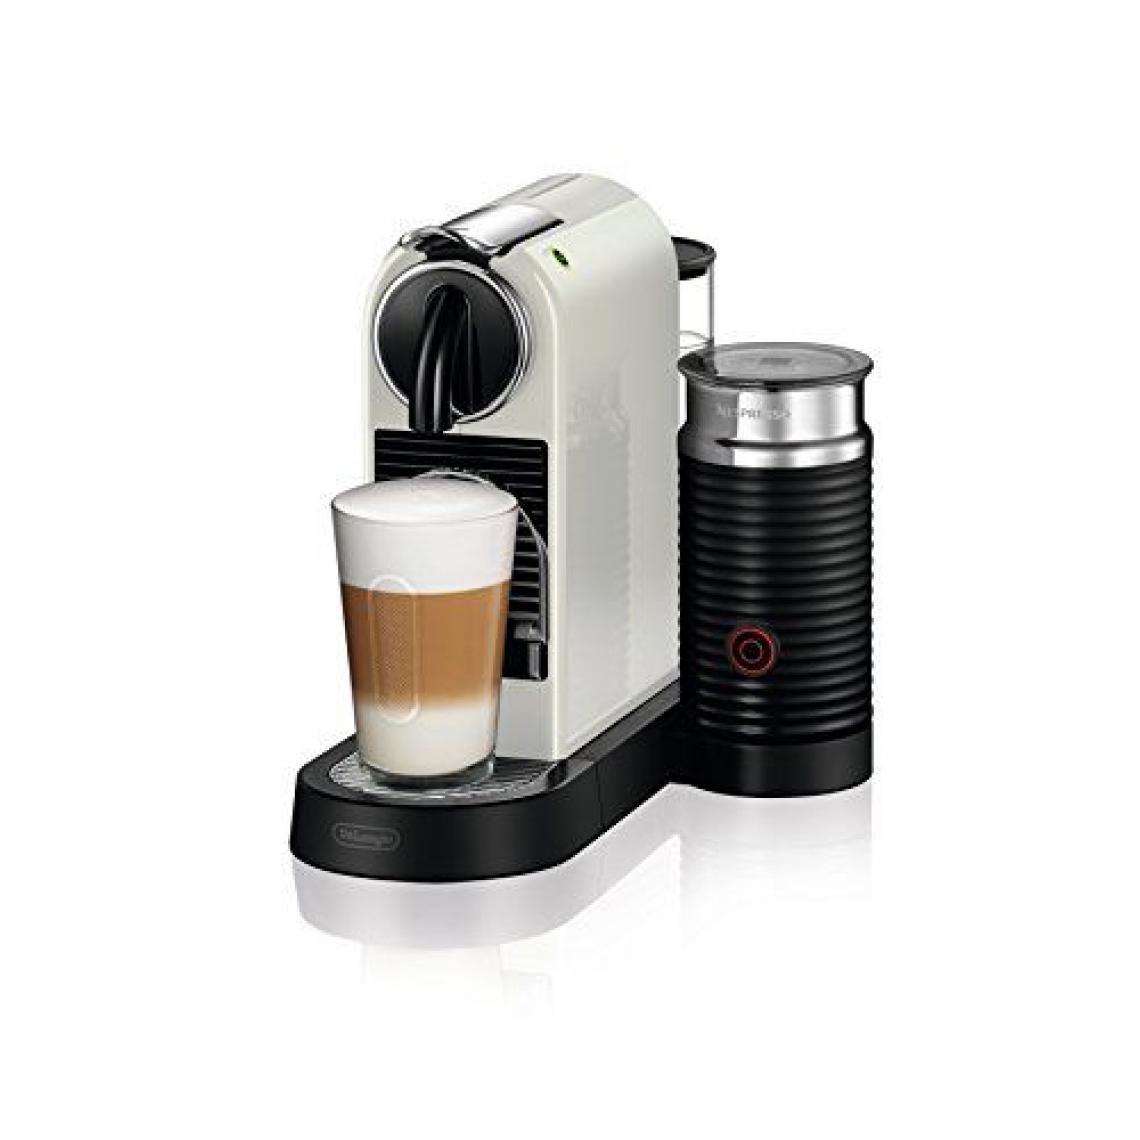 Inconnu - Delonghi Machine à café Nespresso en267. WAE Citiz, blanc - Expresso - Cafetière